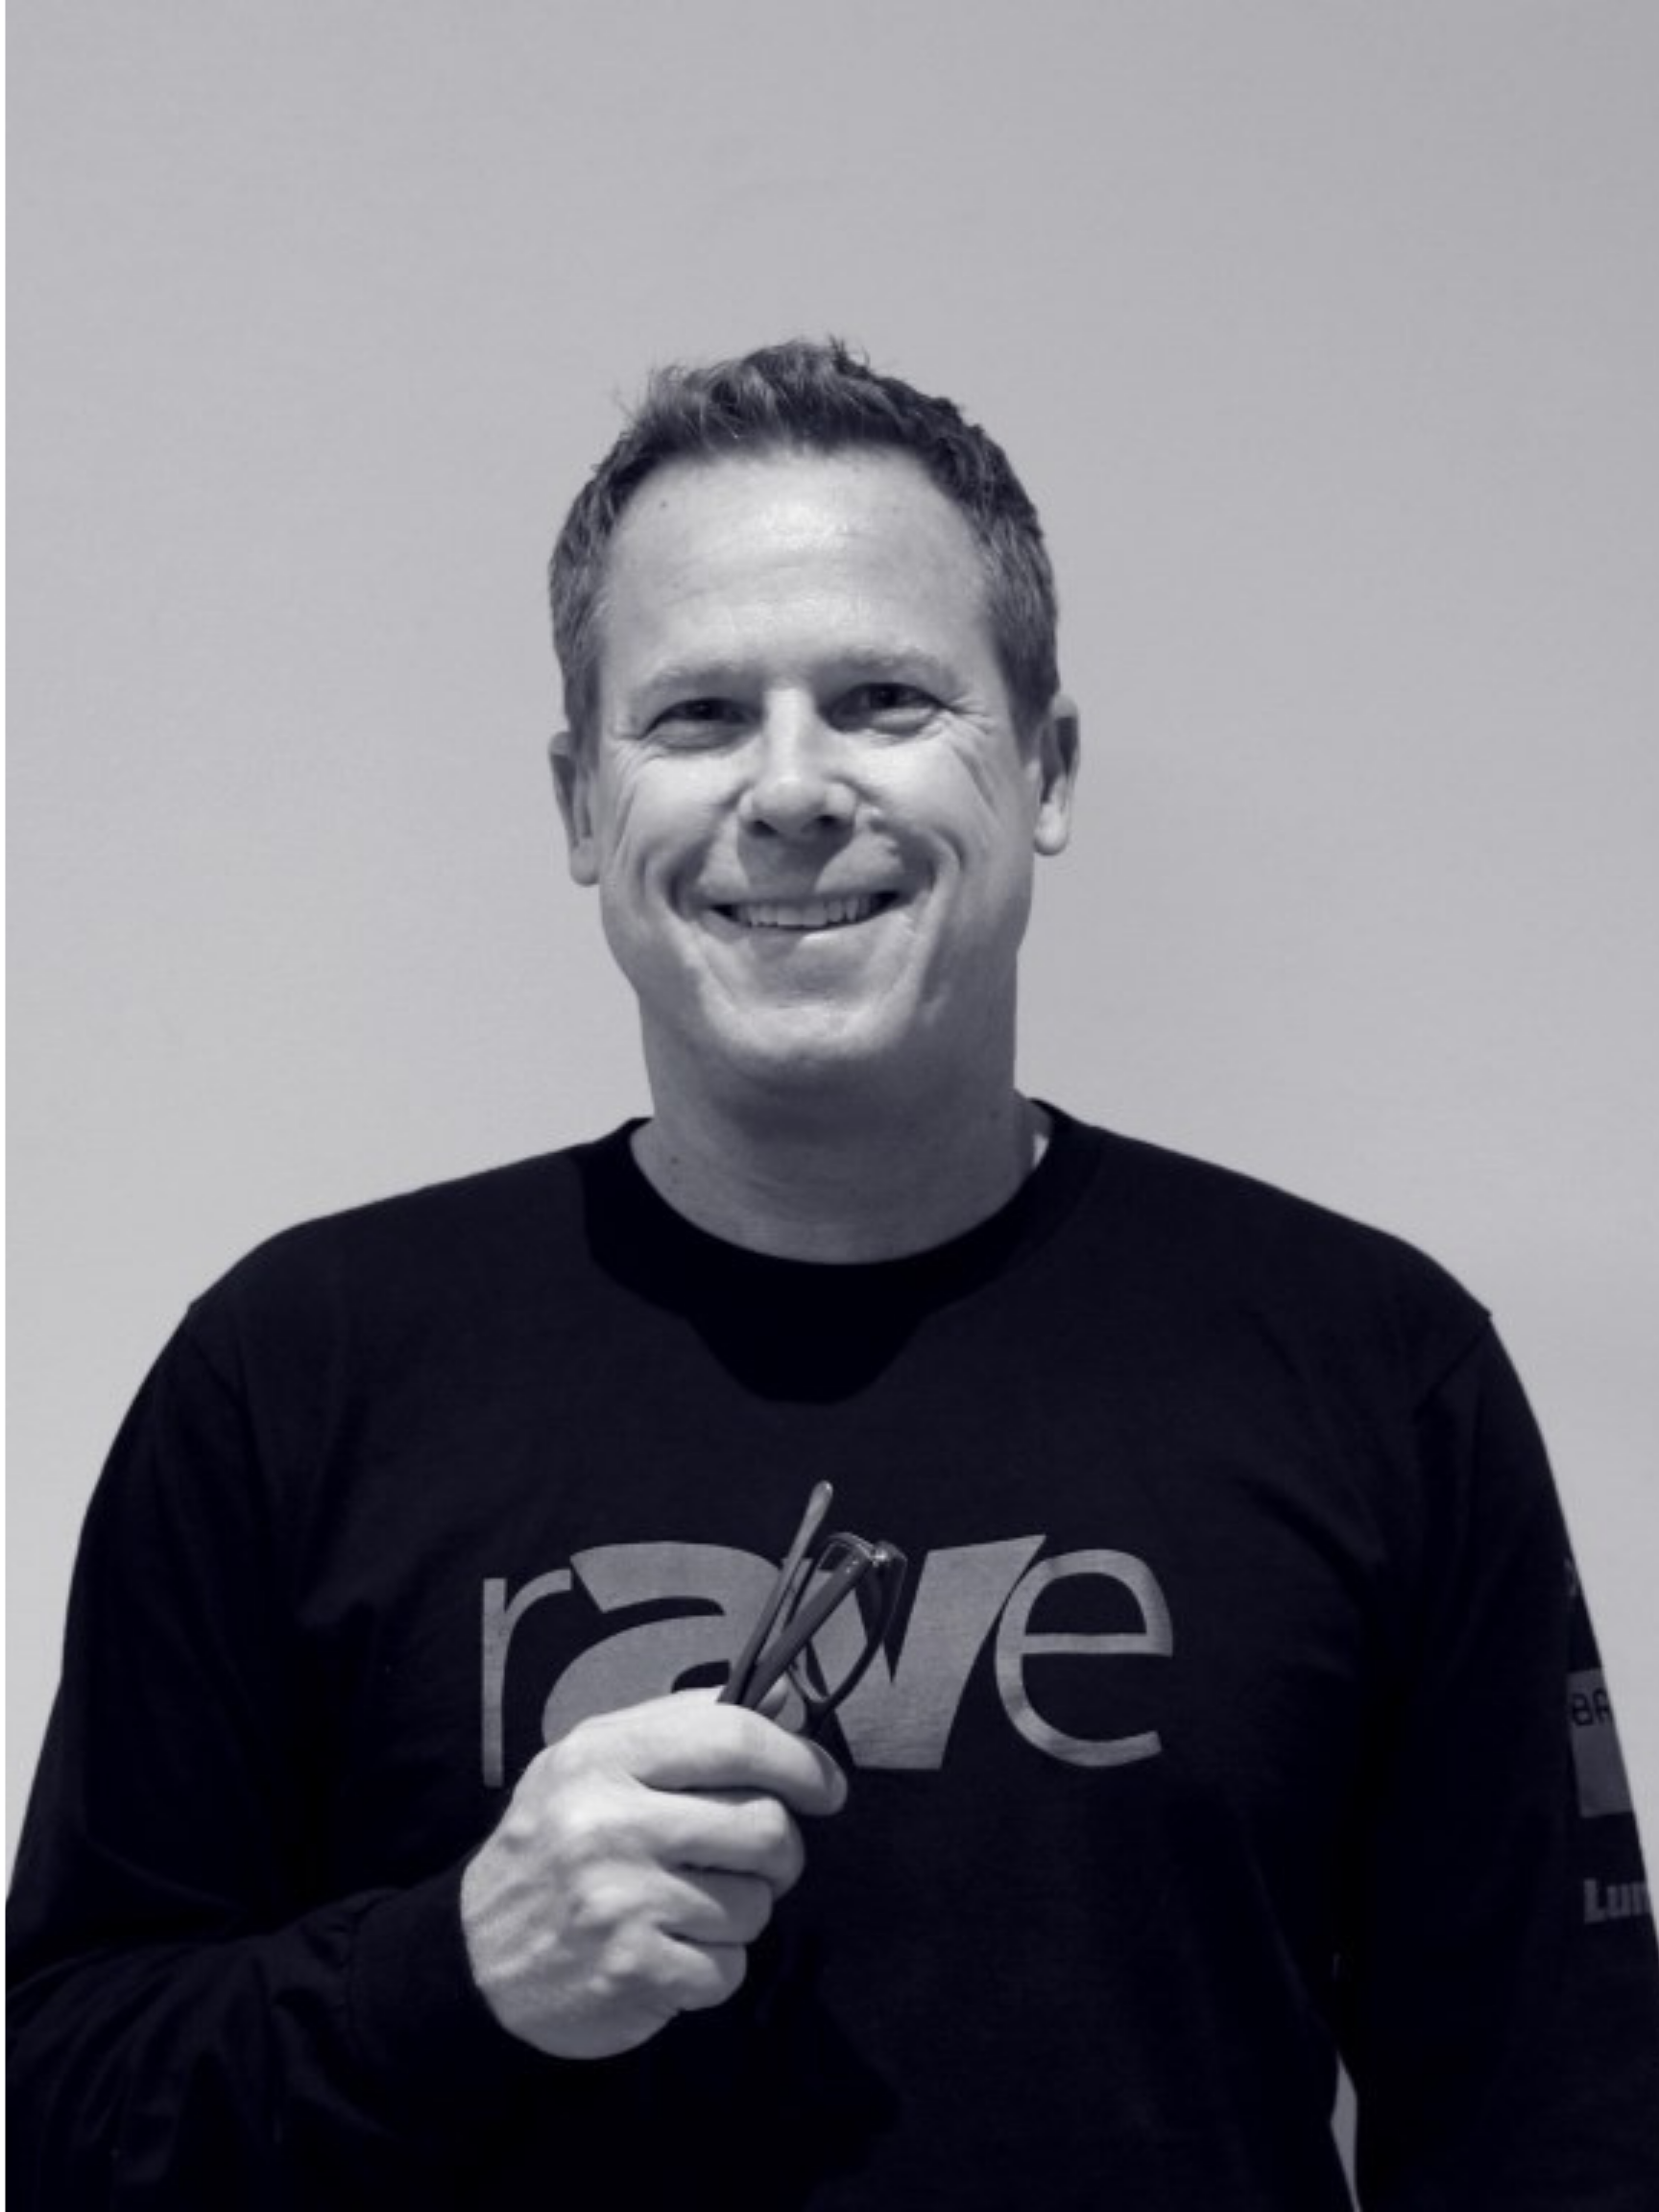 Gary Kayye, Co-Founder & Director, The rAVe Agency